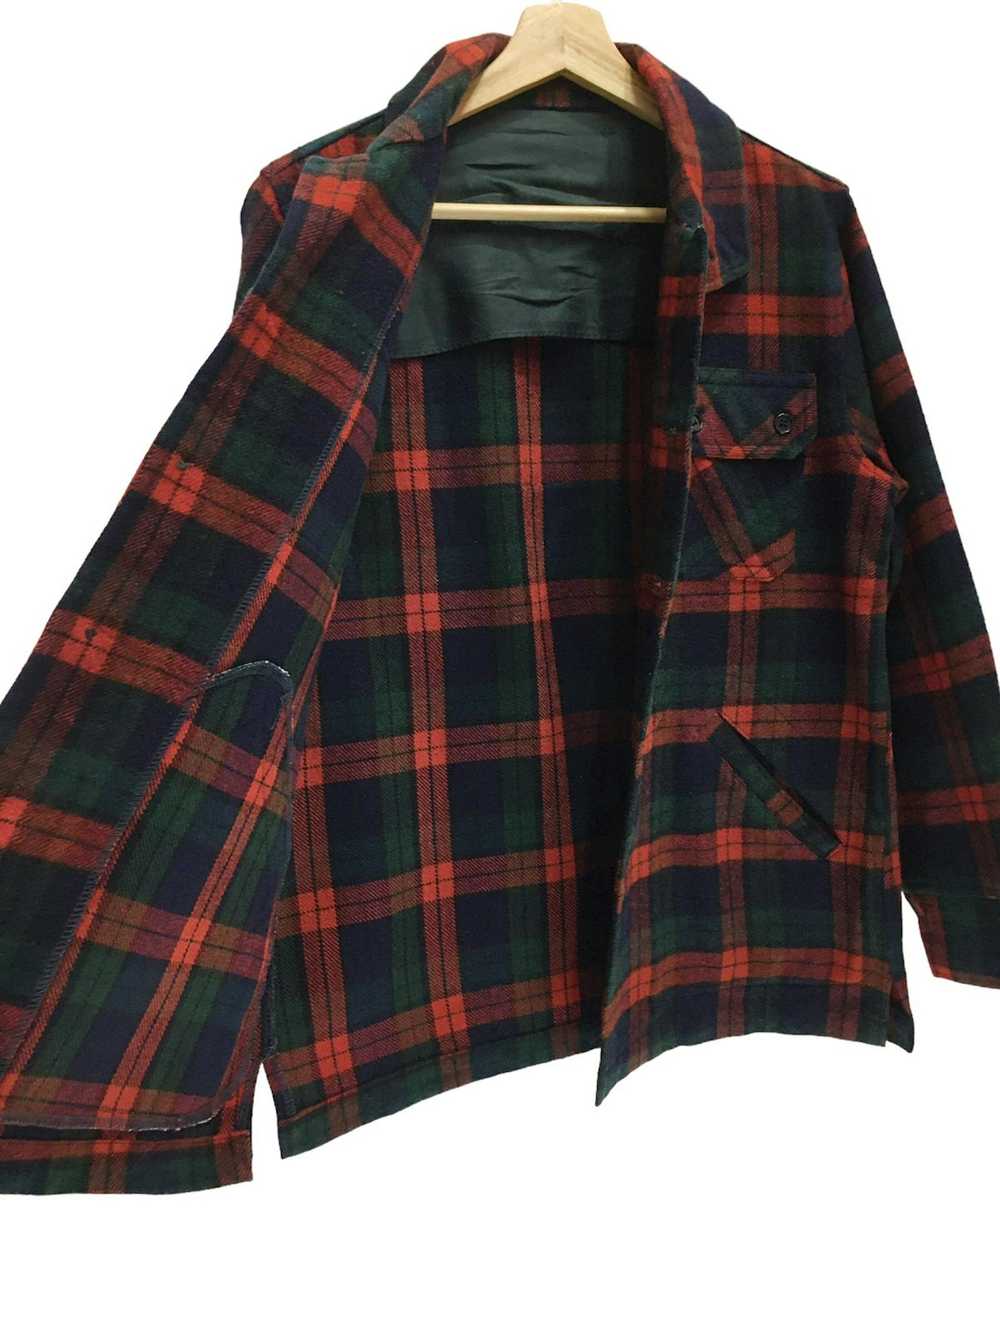 Japanese Brand Vintage 80s Checked Jacket Wool - image 4